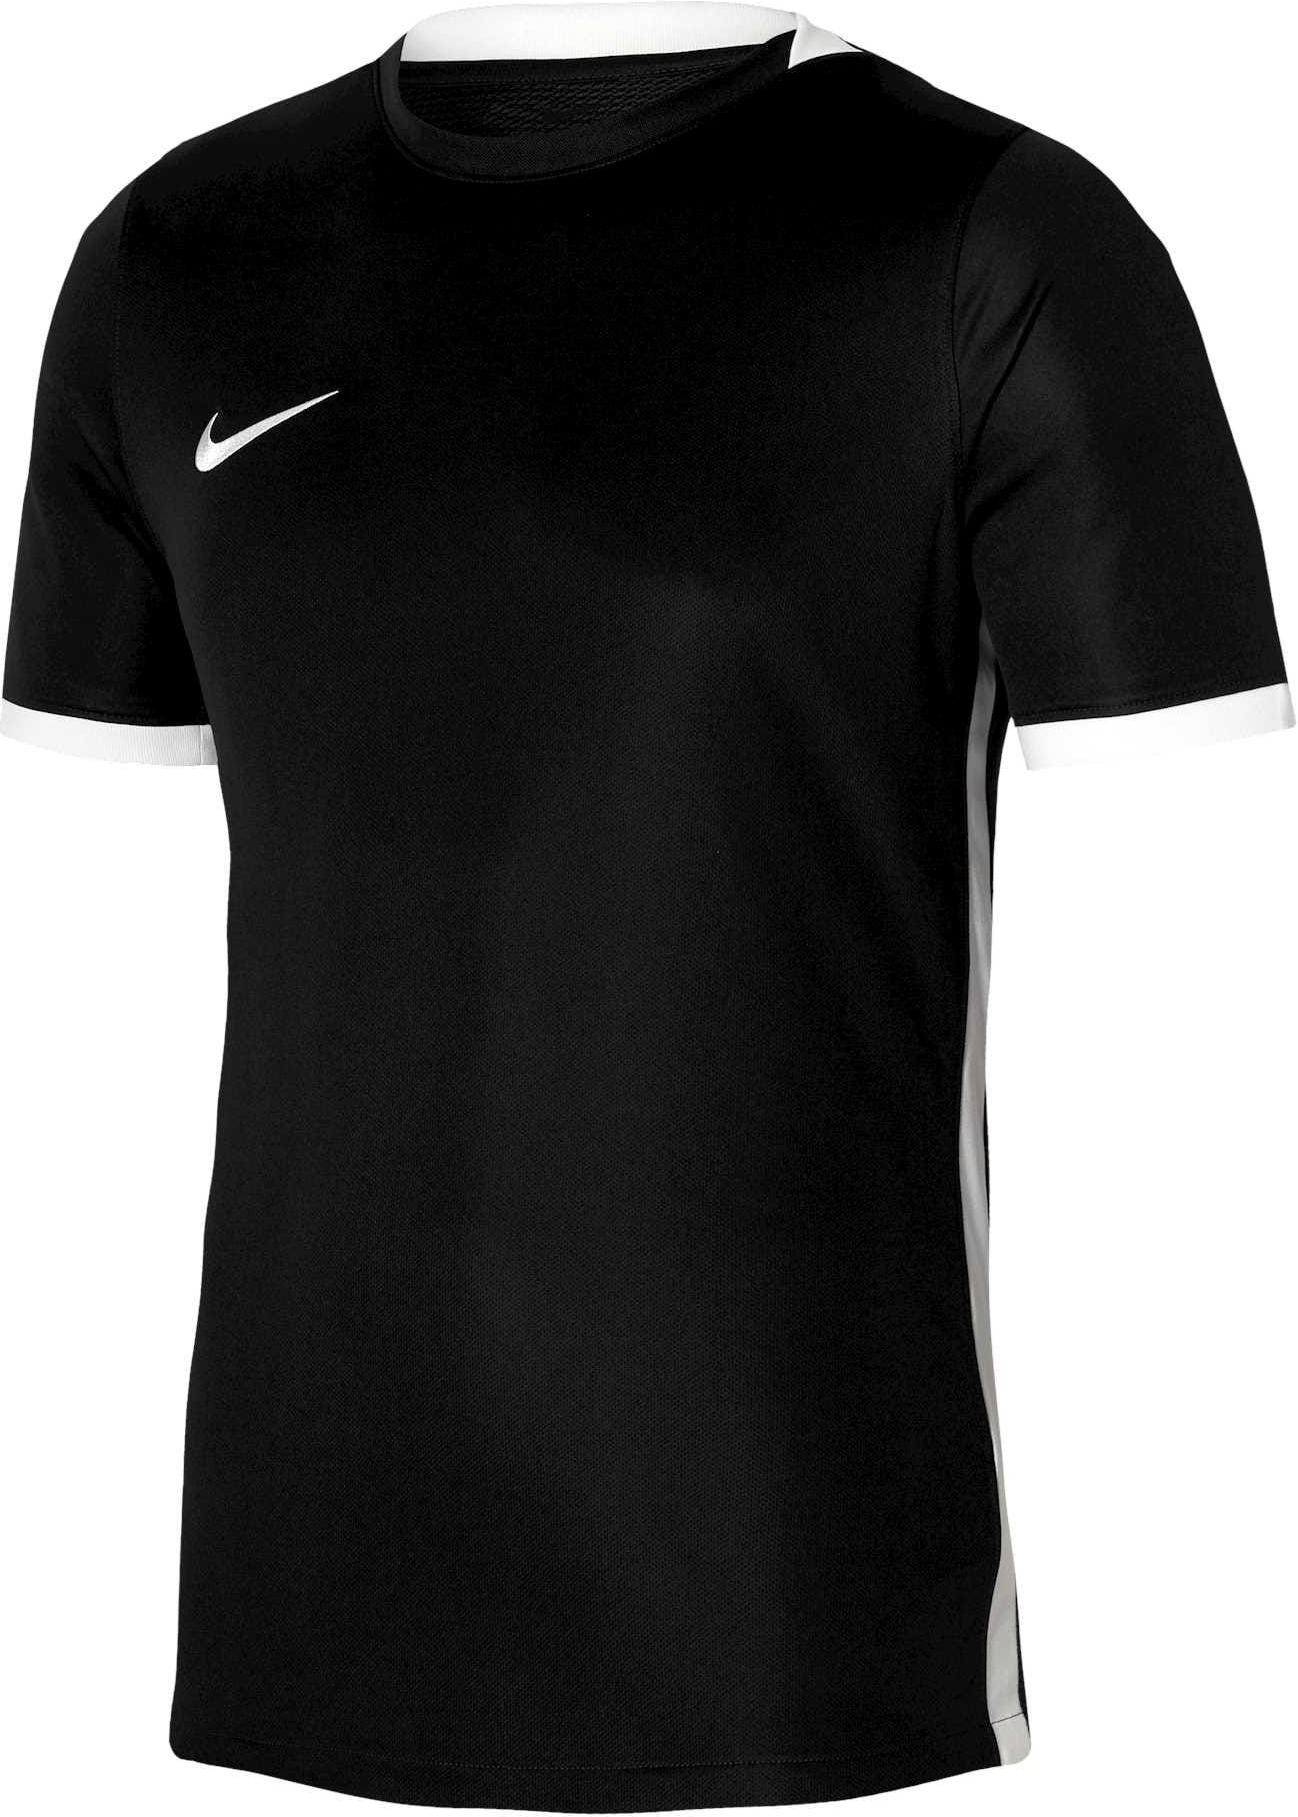 Dres Nike Dri-FIT Challenge 4 Men s Soccer Jersey